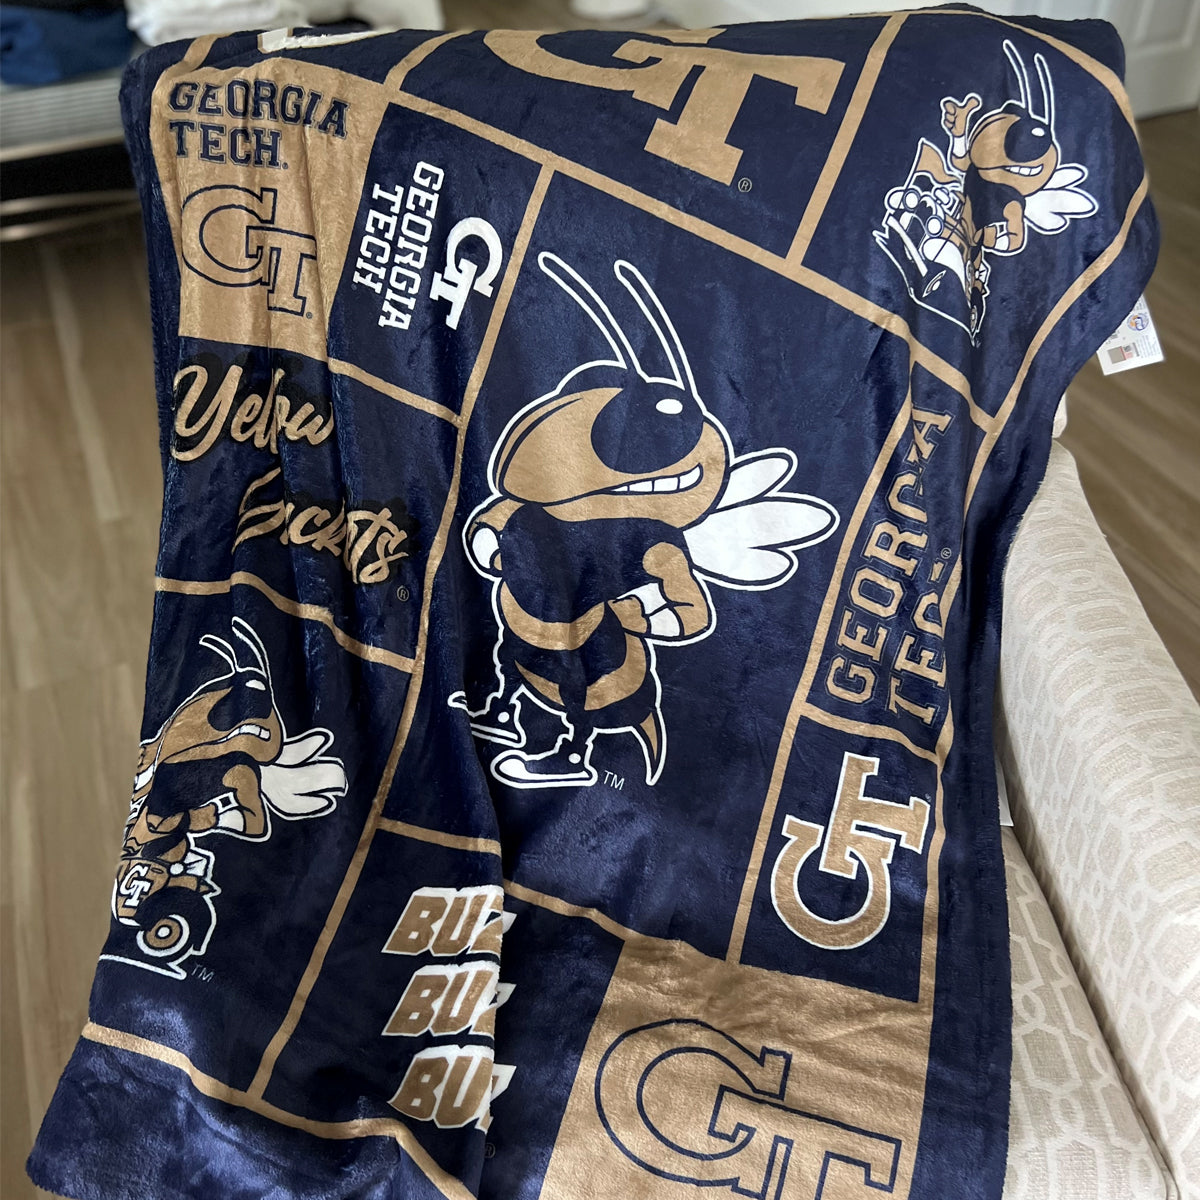 Eastern Illinois University Panthers EIU Kids Game Day Blue Plush Soft Minky Blanket 36 x 48 Mascot